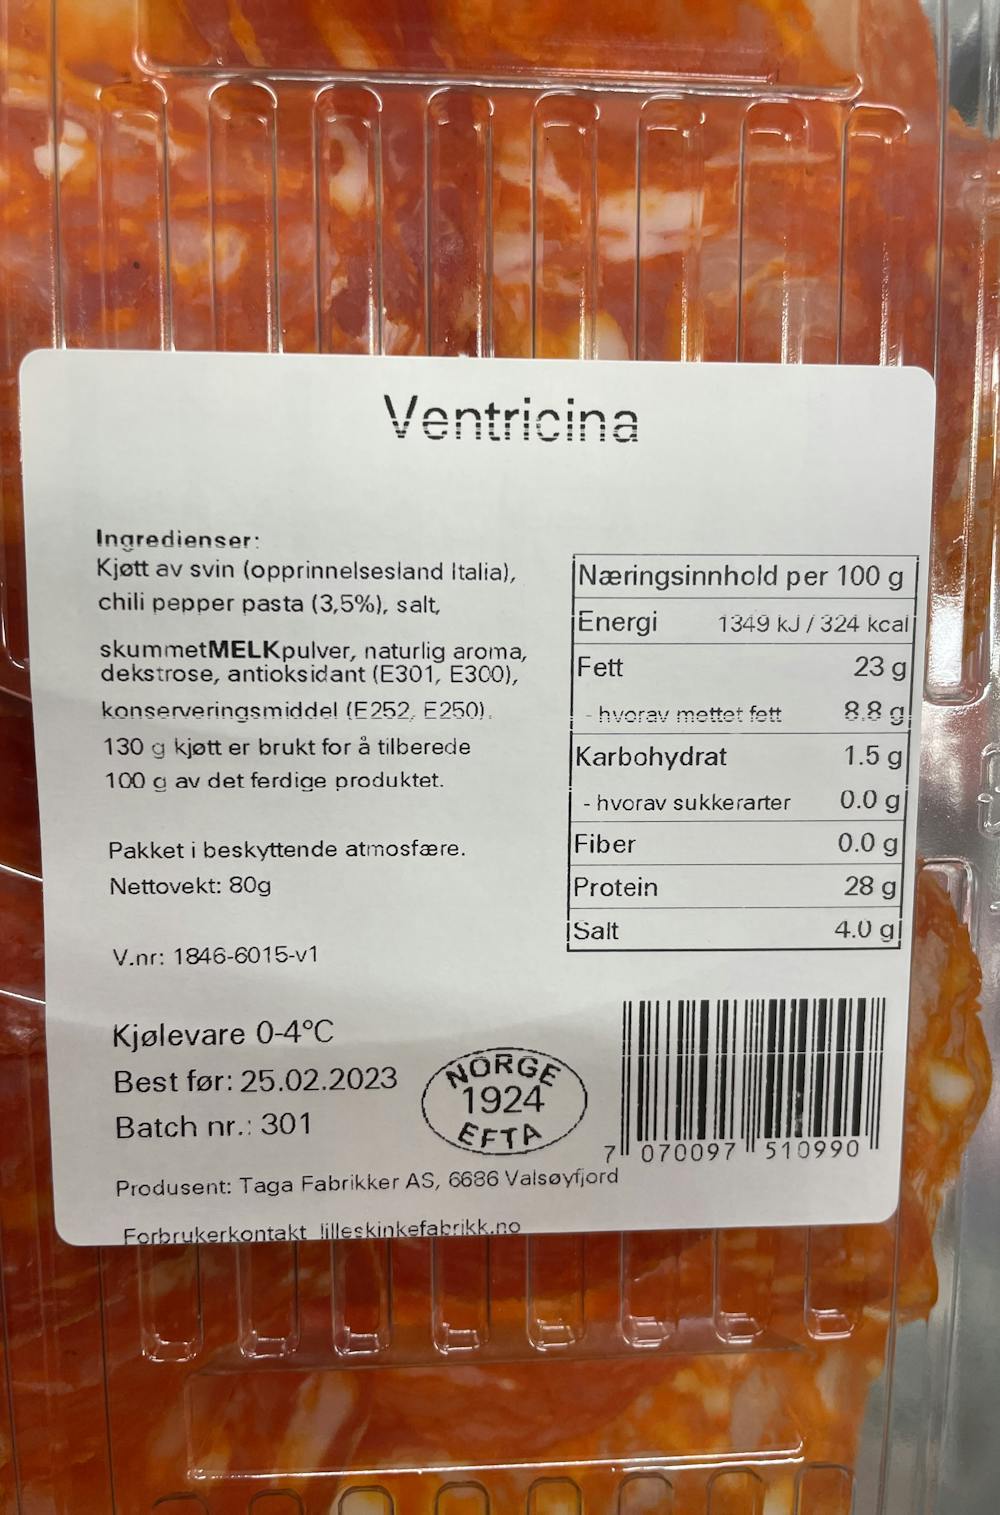 Ingrediensliste - Spicy salami ventricina, Lille skinke fabrikk